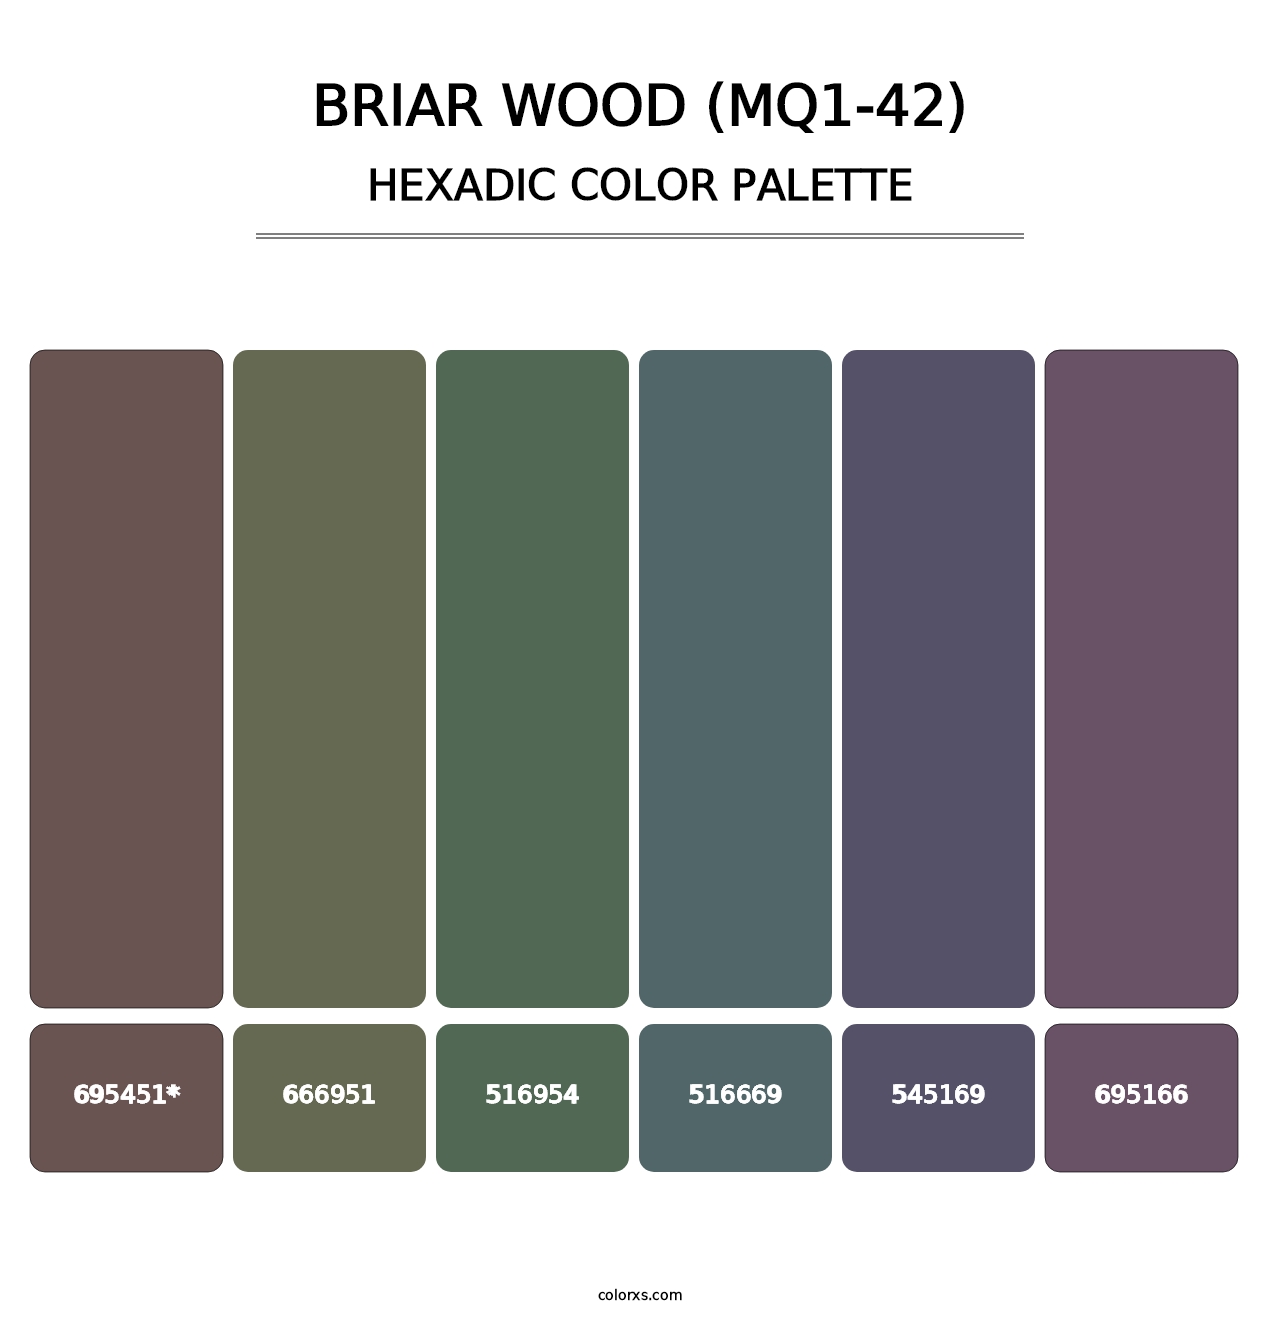 Briar Wood (MQ1-42) - Hexadic Color Palette